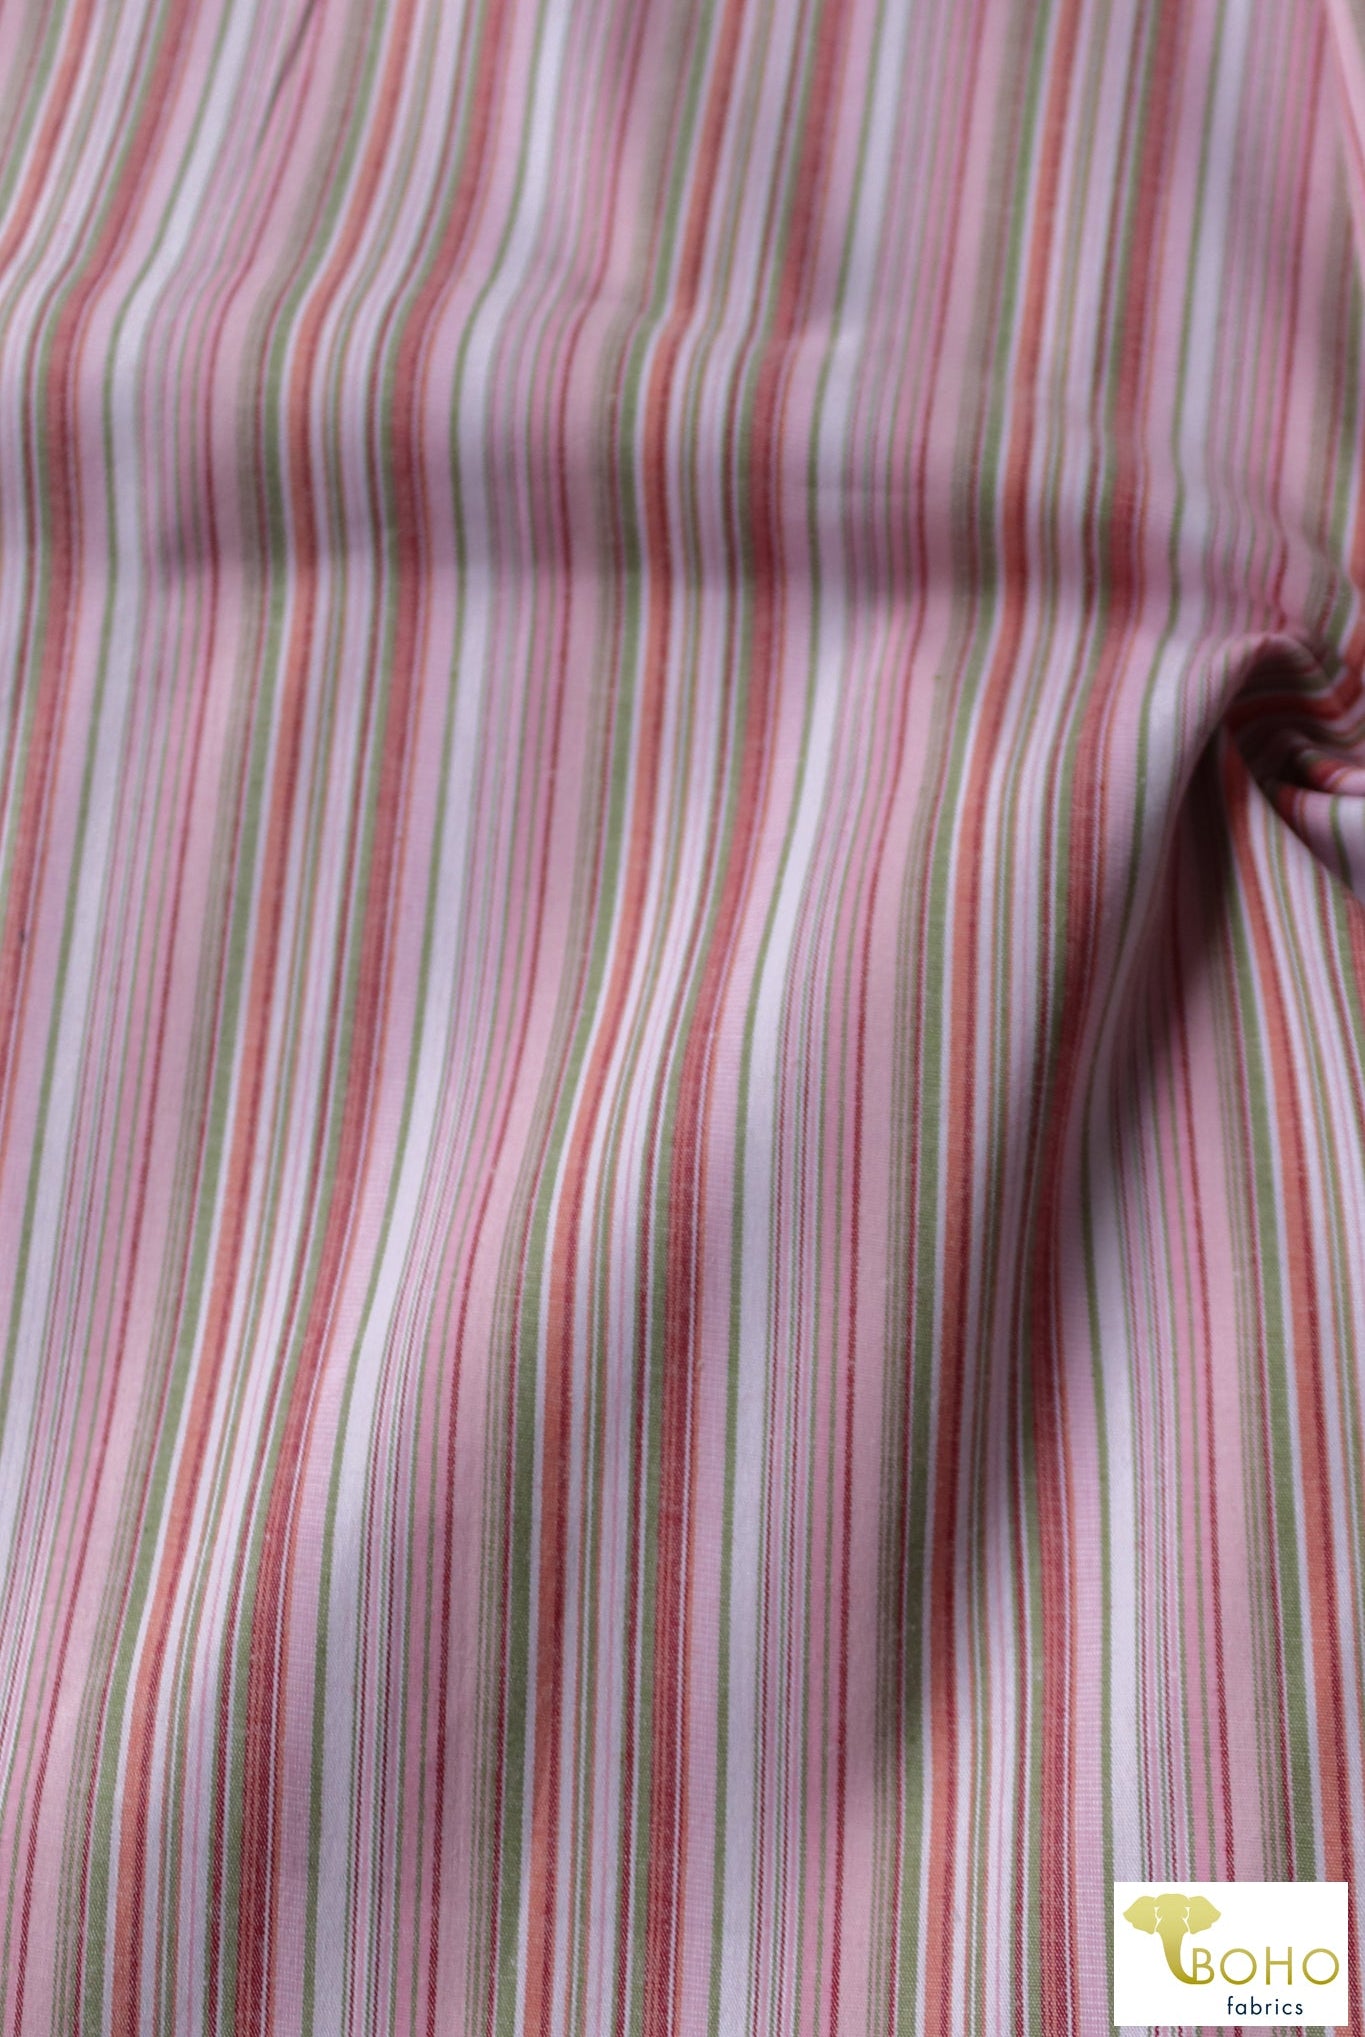 Strawberry Shortcake Stripes, Cotton Woven Fabric. - Boho Fabrics